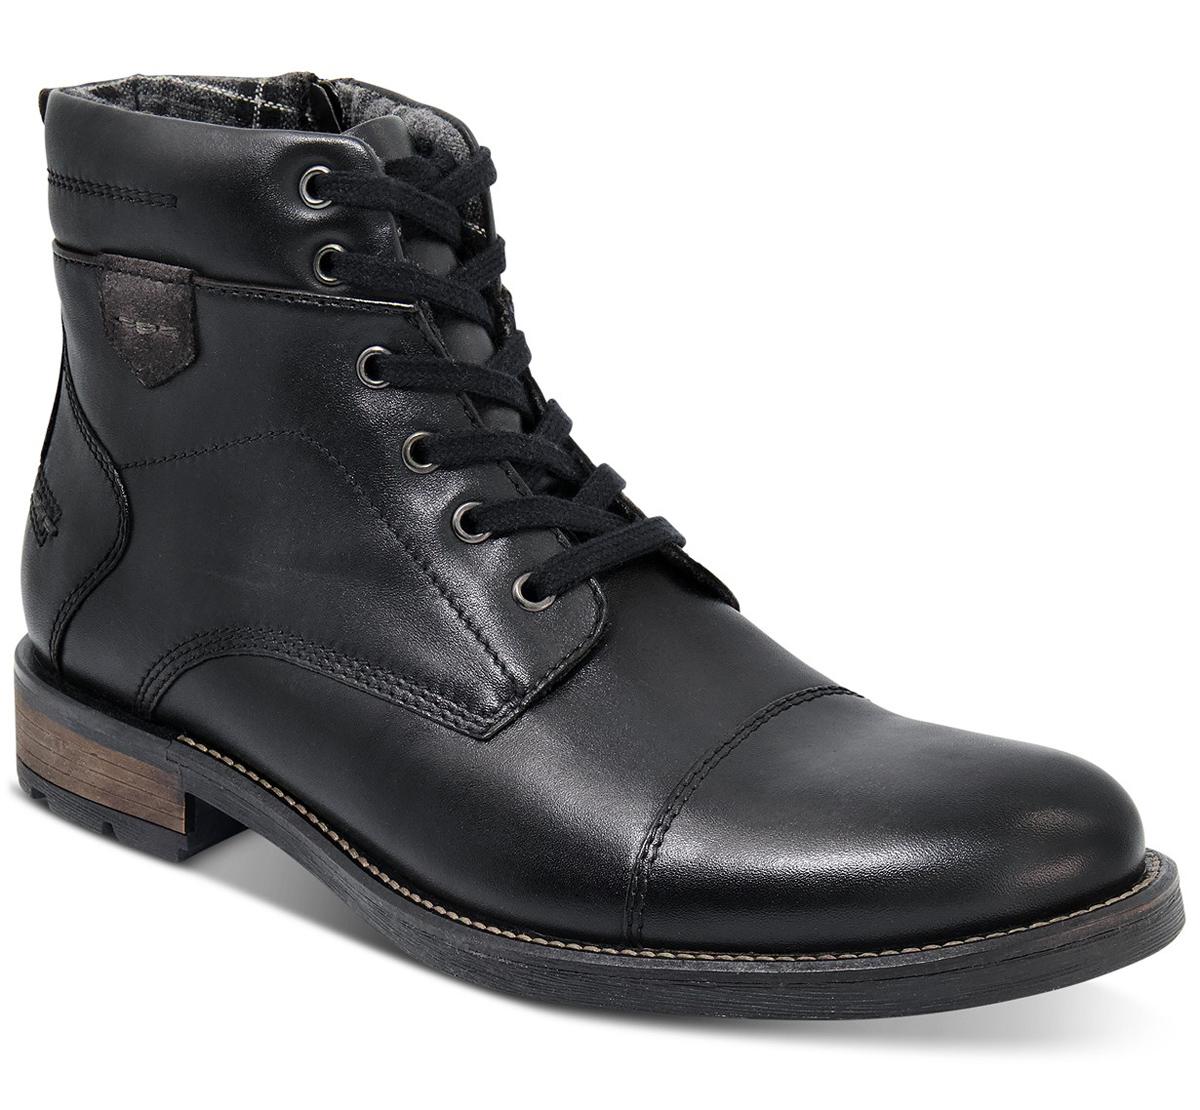 Alfani Mens Jack Cap Toe Leather Boots for $24.99 Shipped